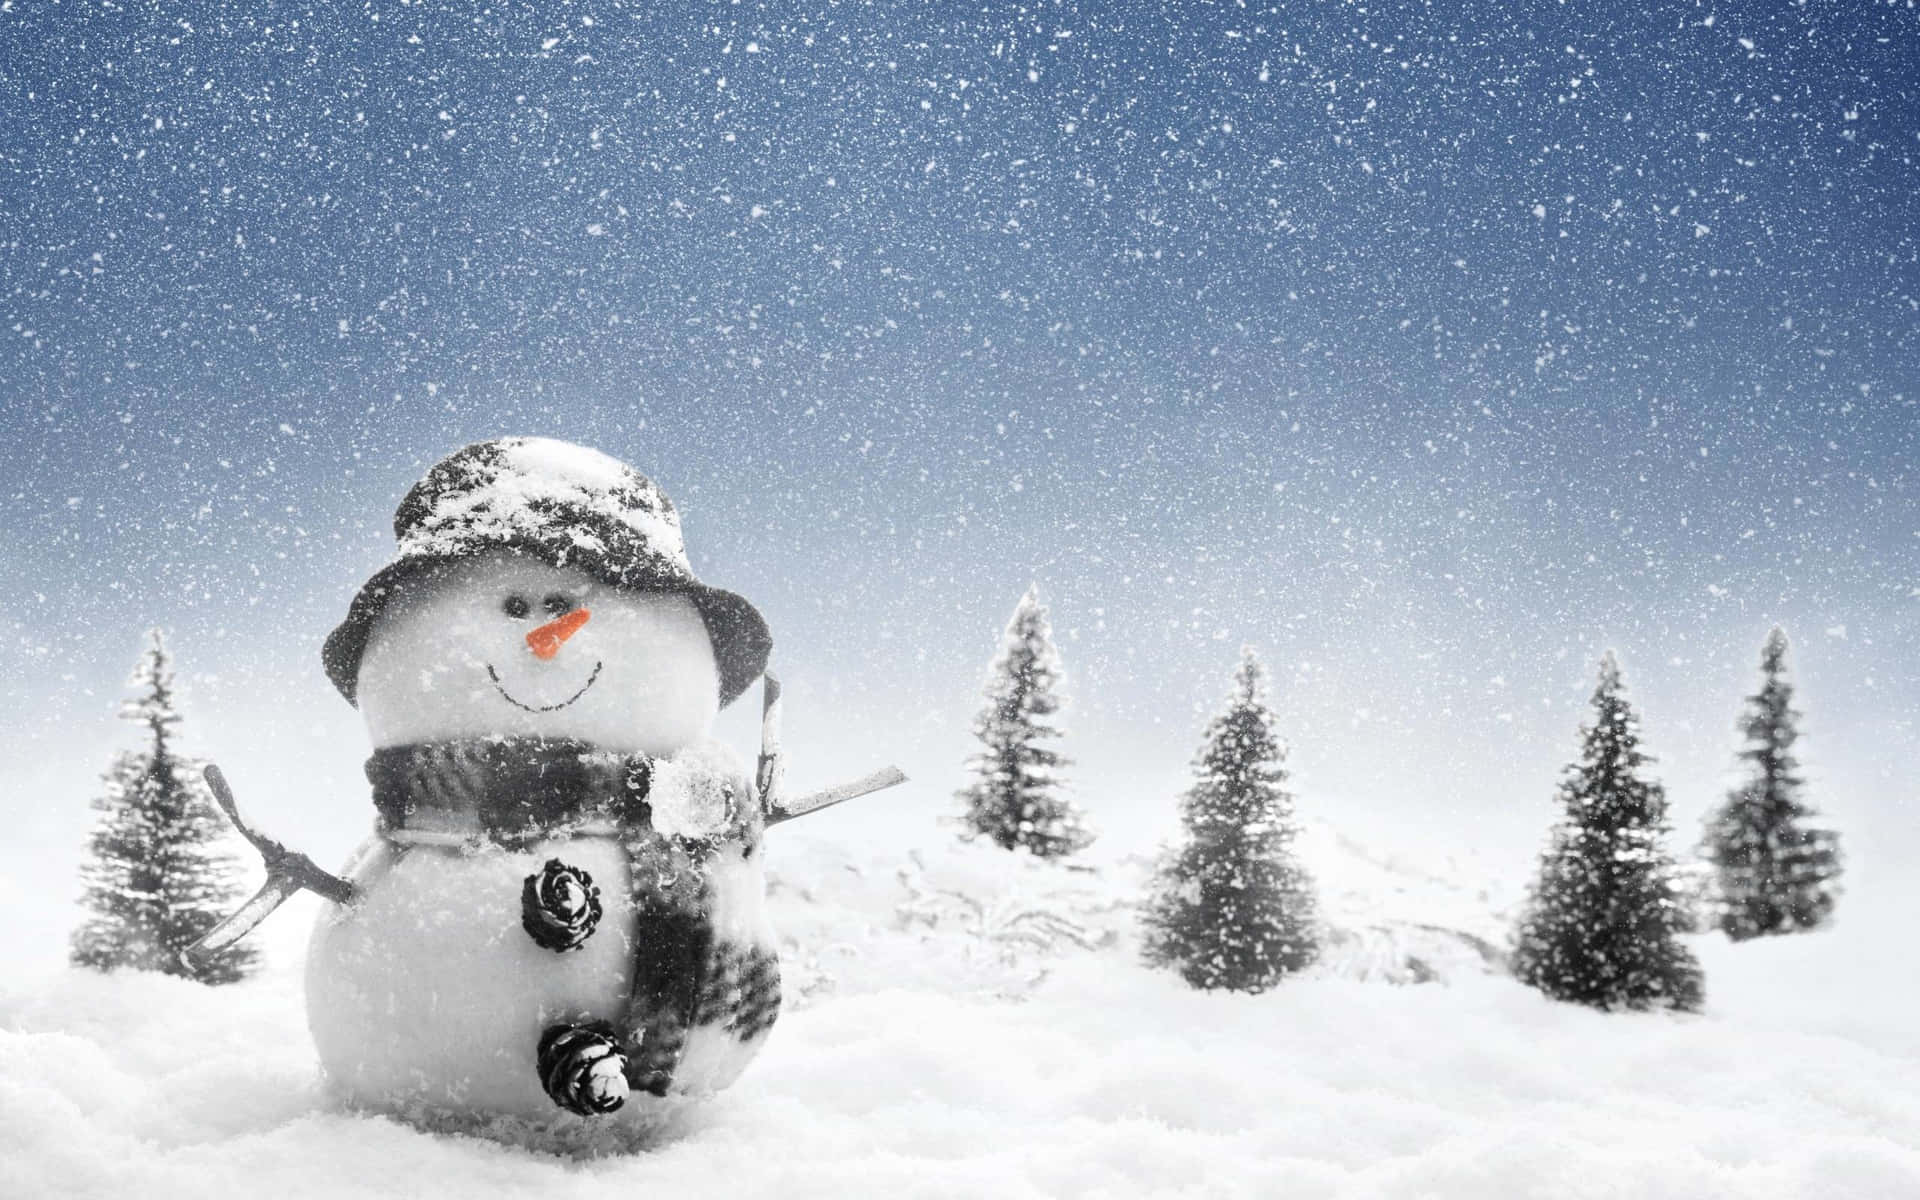 "enchanting Winter Wonderland: An Elegant Snowman Amidst The Untouched Snow."